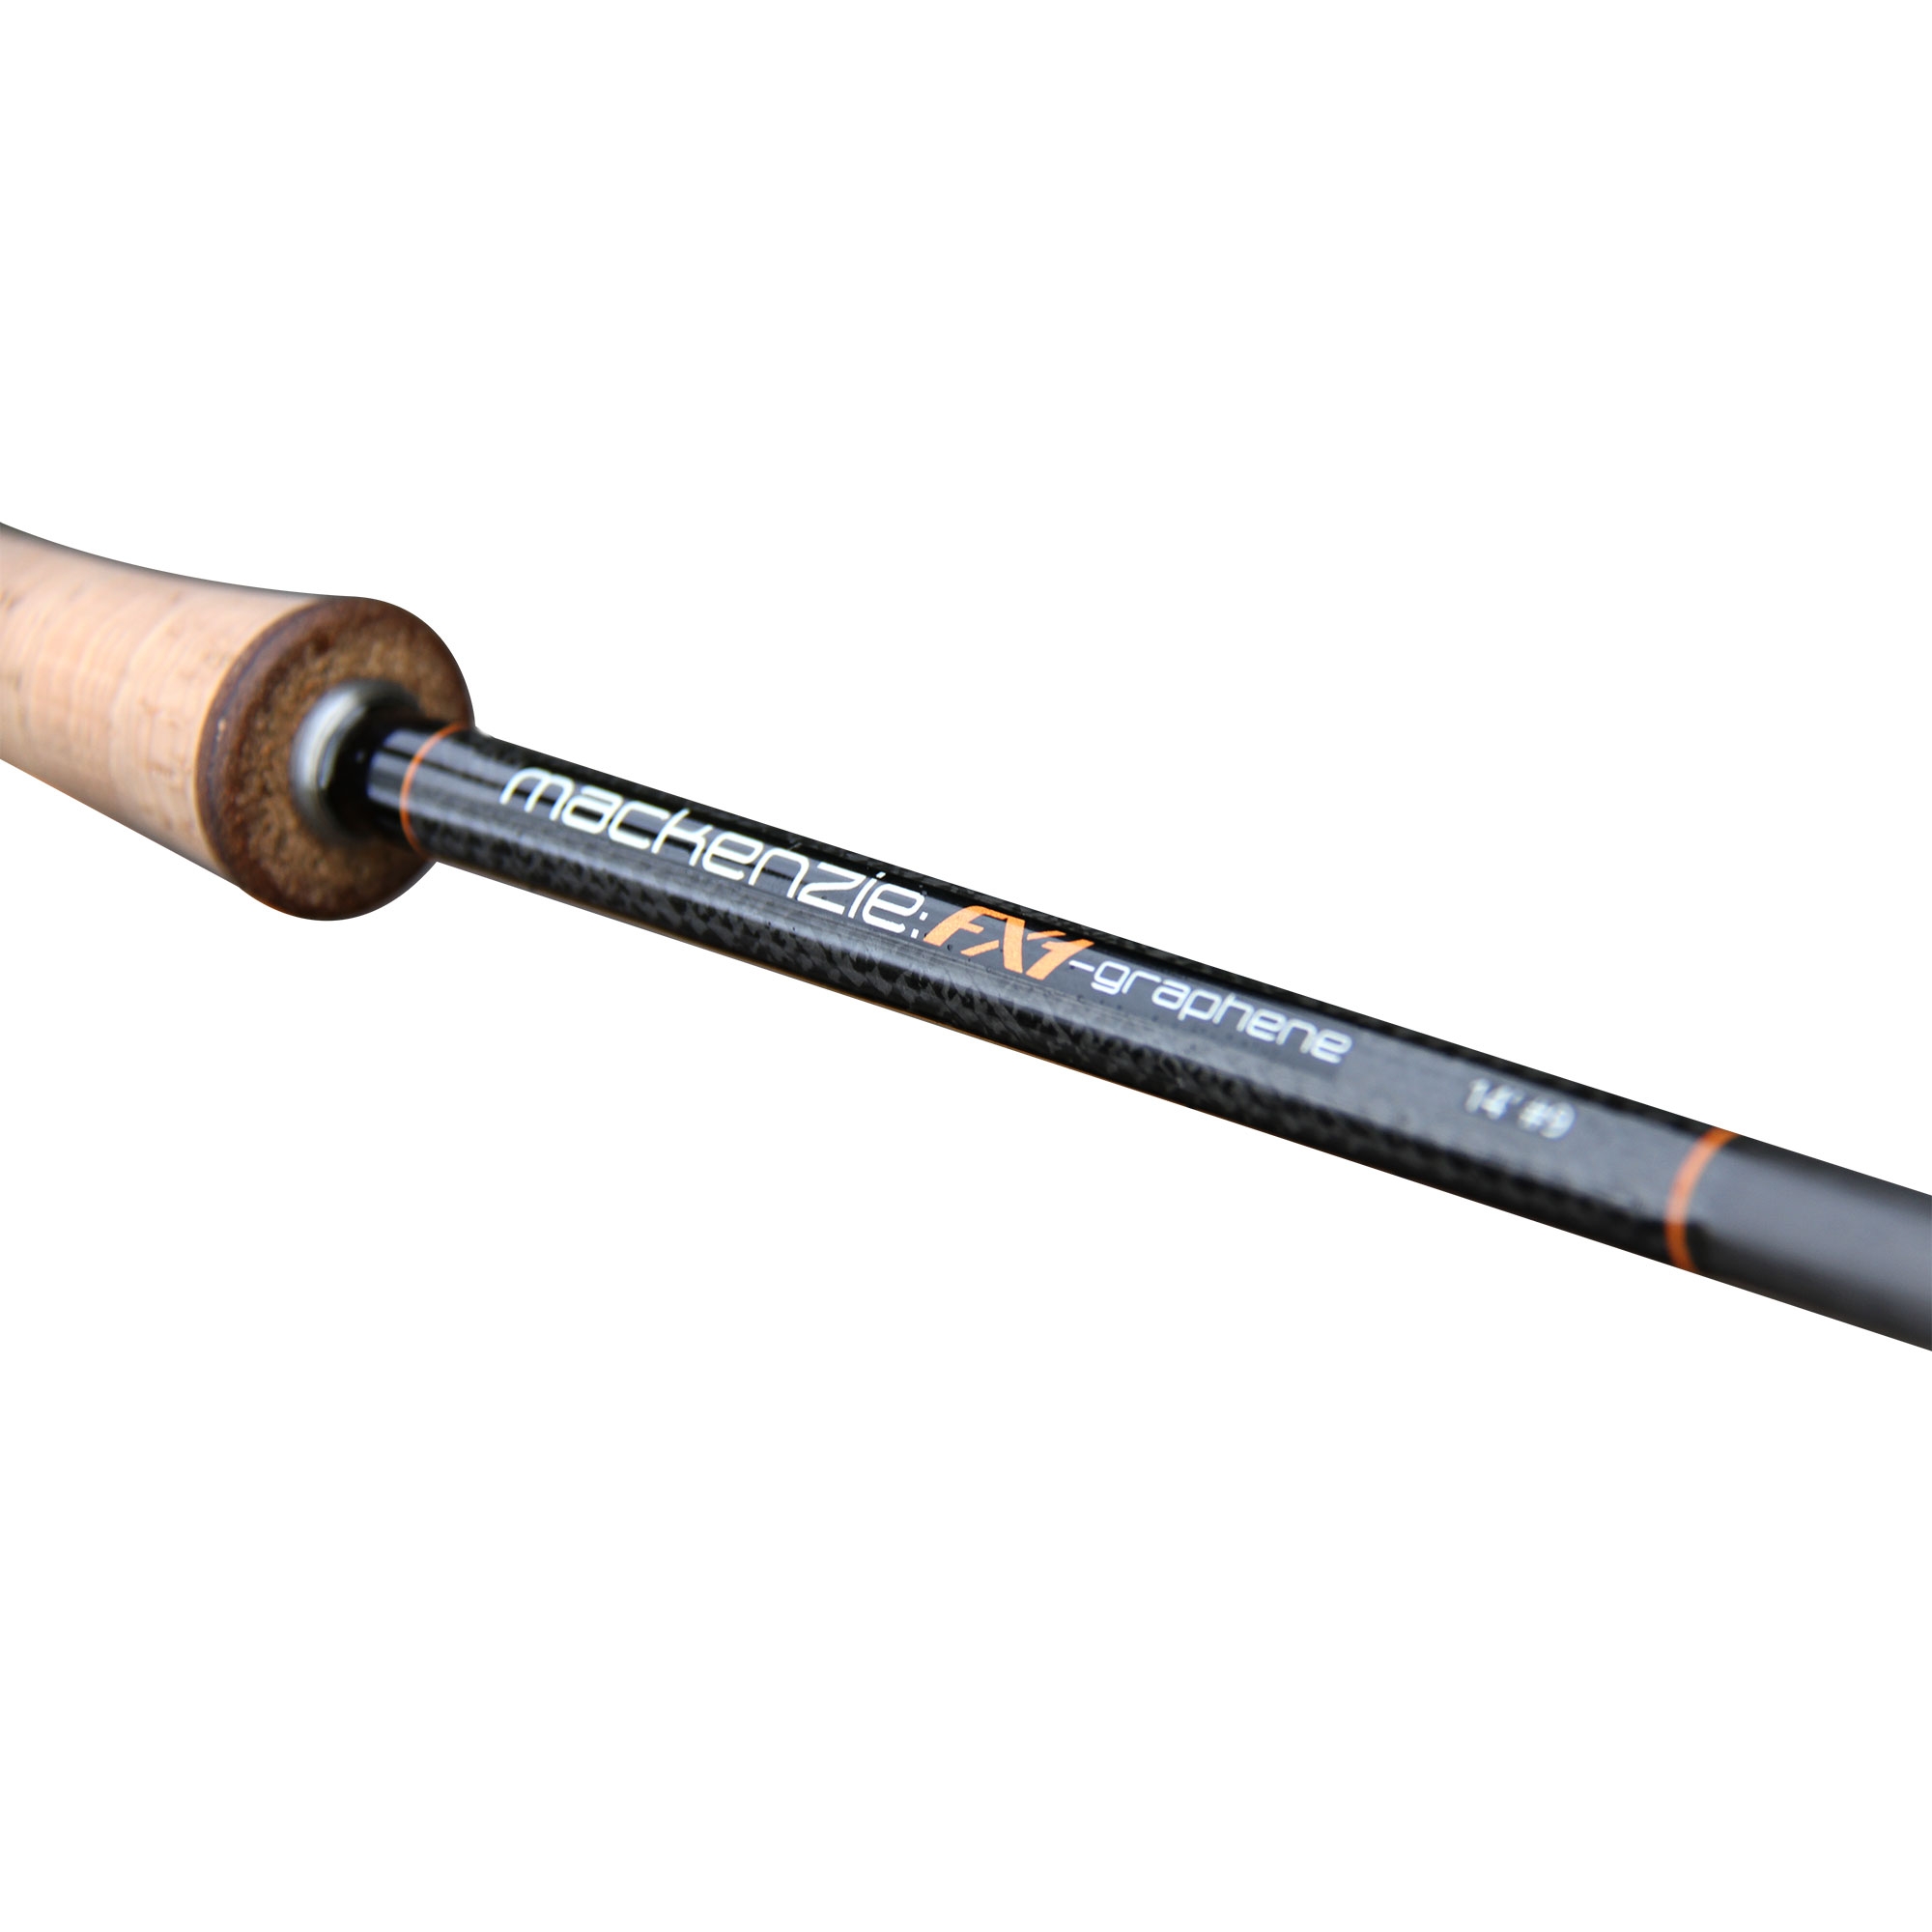 Mackenzie FX1 Double Handed Salmon Fly Rod - Graphene Fly Fishing Rods